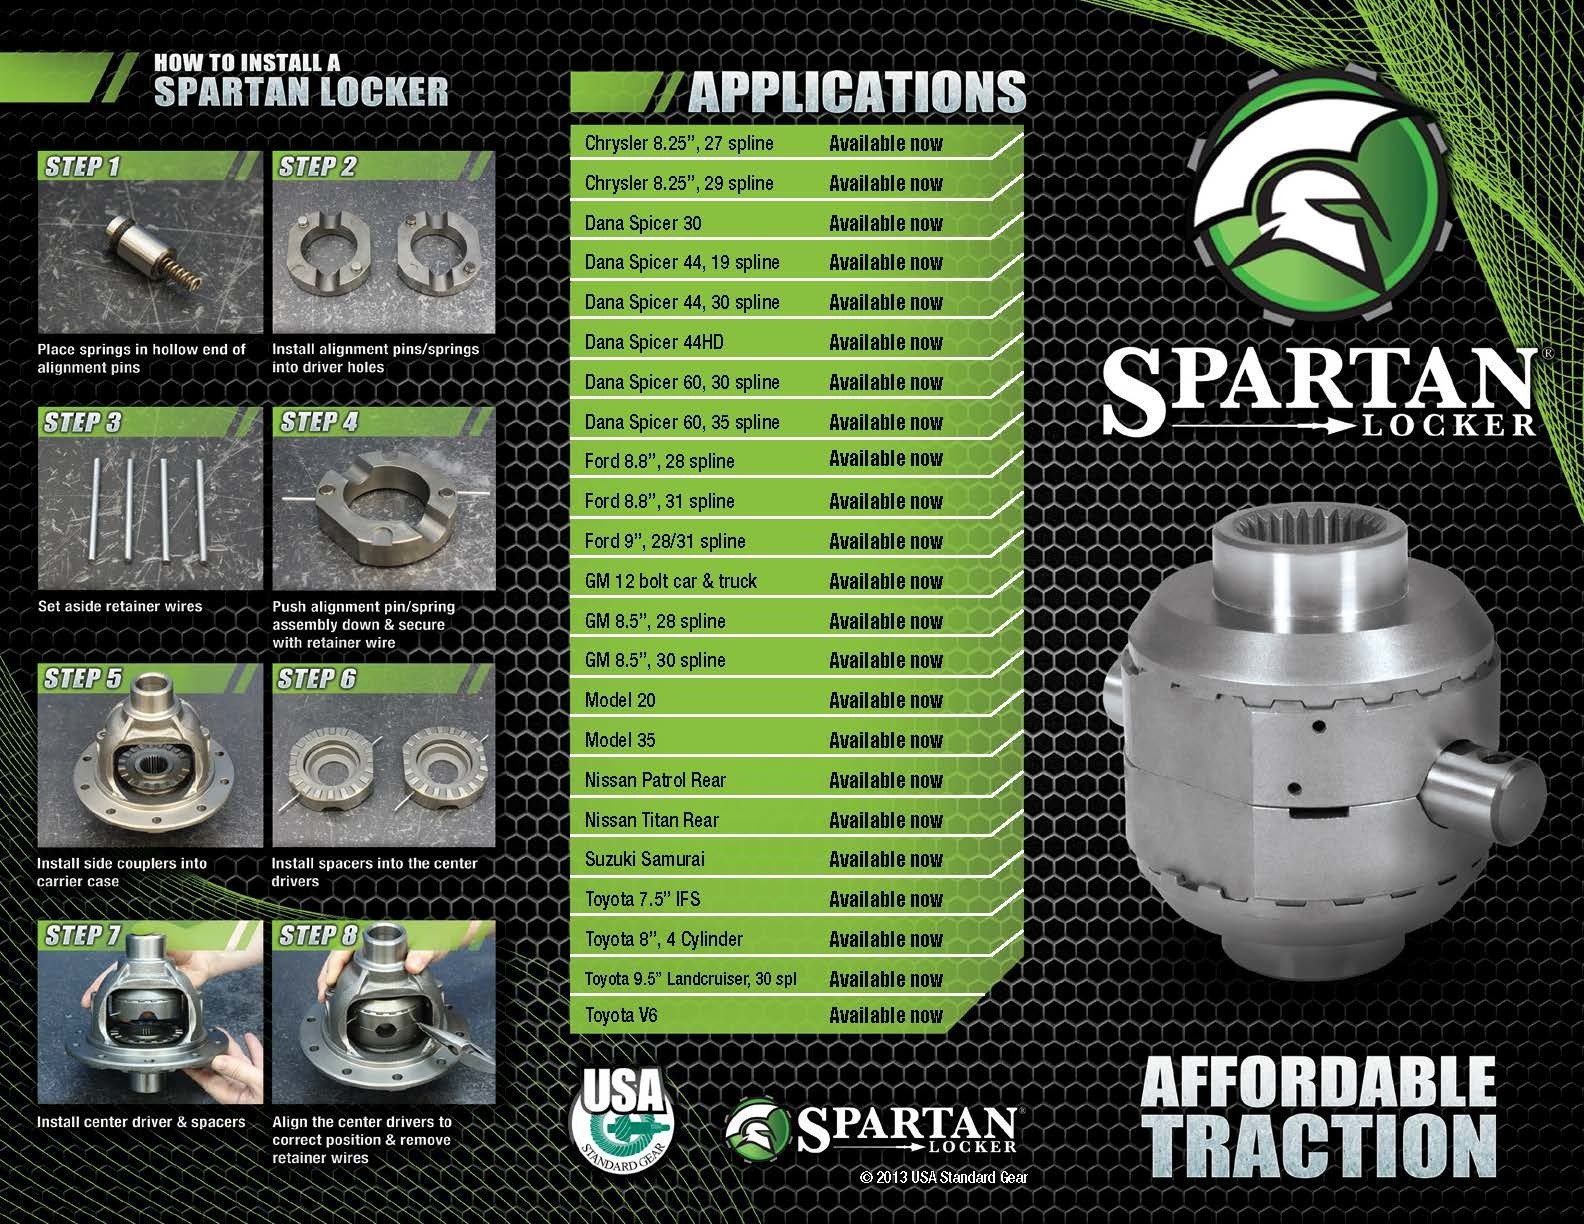 Spartan Locker for Ford 8.8", 31 spline, includes 7/8" cross pin shaft